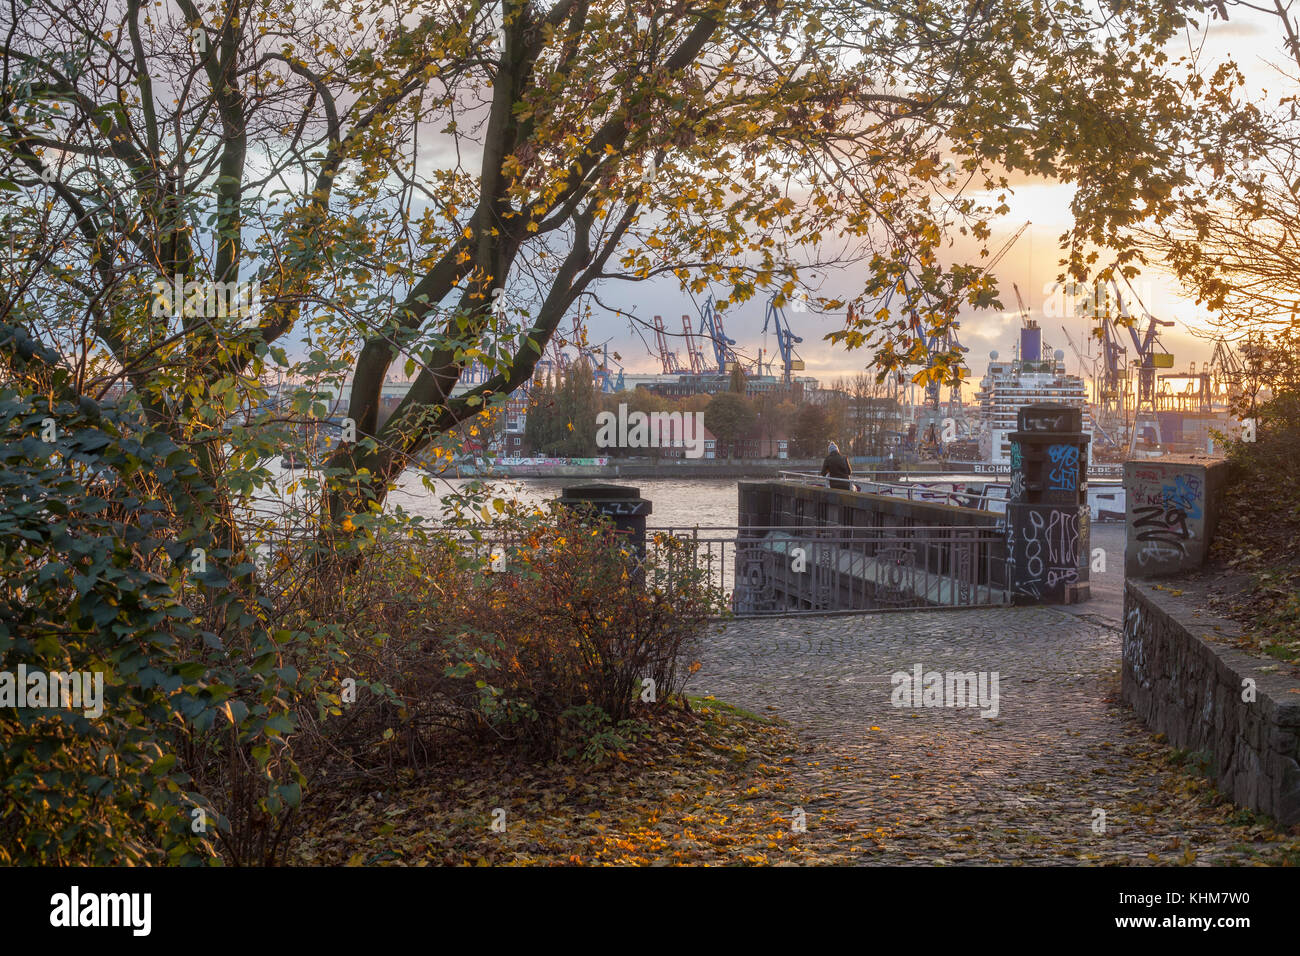 Ponti di atterraggio e porto di Sankt-Pauli in autunno a sera, Amburgo, Germania, Europa i Herbststimmung bei den St.-Pauli-Landungsbrücken bei Sonnenun Foto Stock